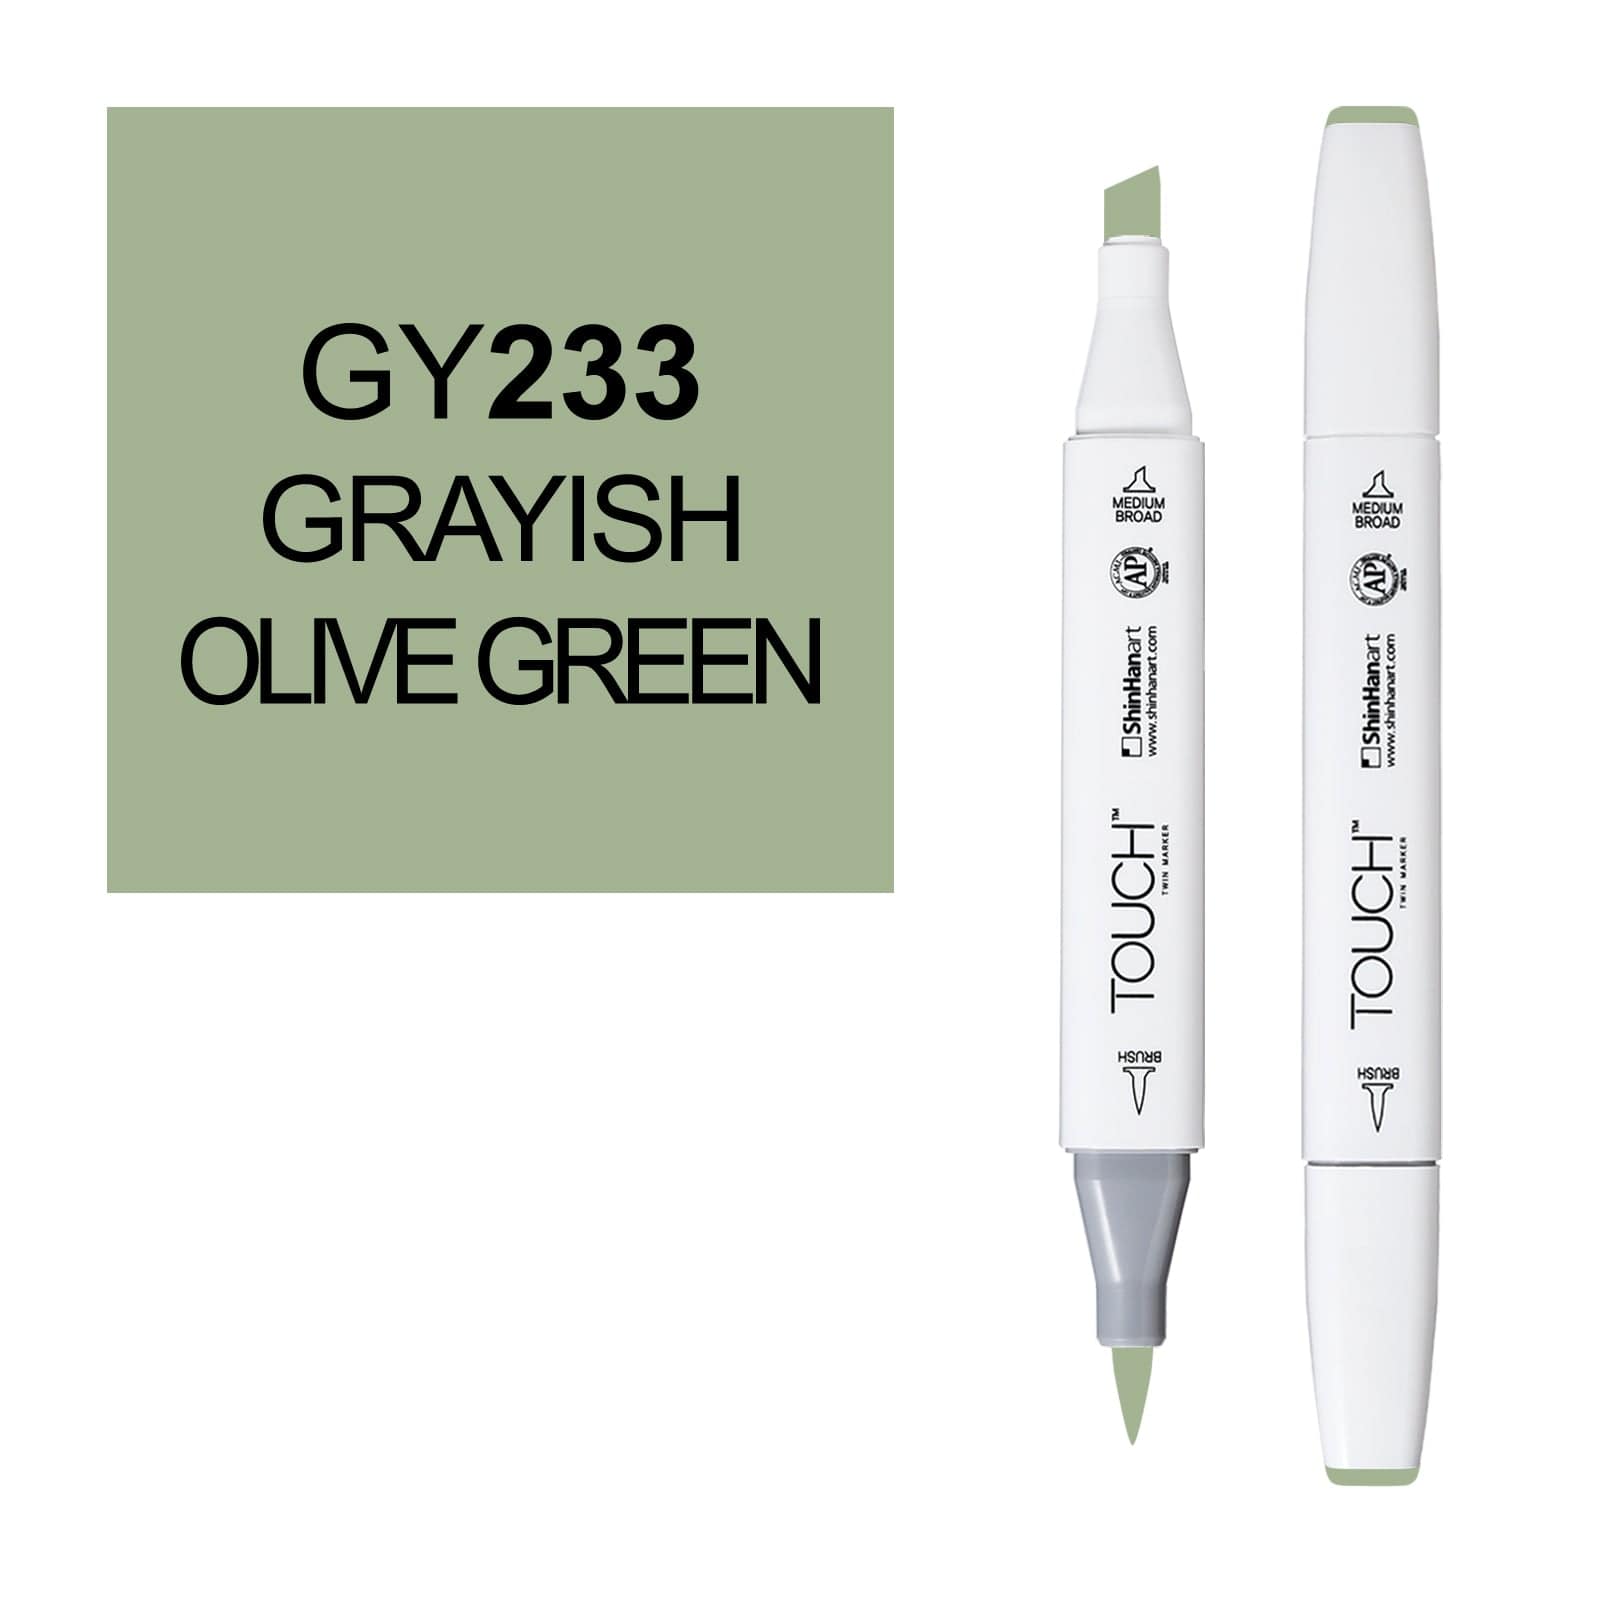 ShinHanart Touch Twin Brush Markers grayish olive green